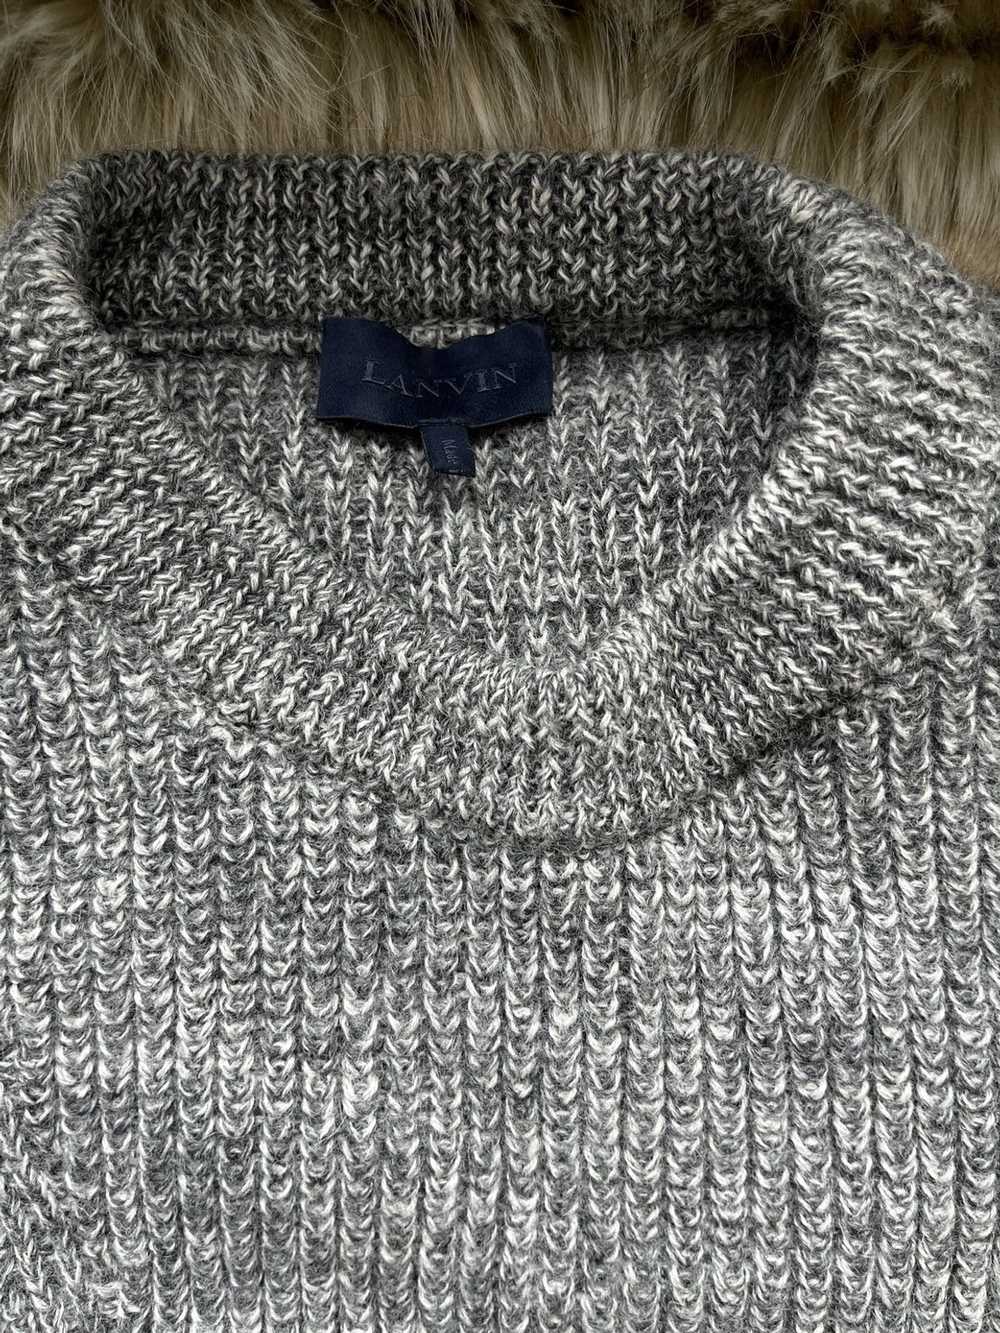 Lanvin Wool sweater - image 4